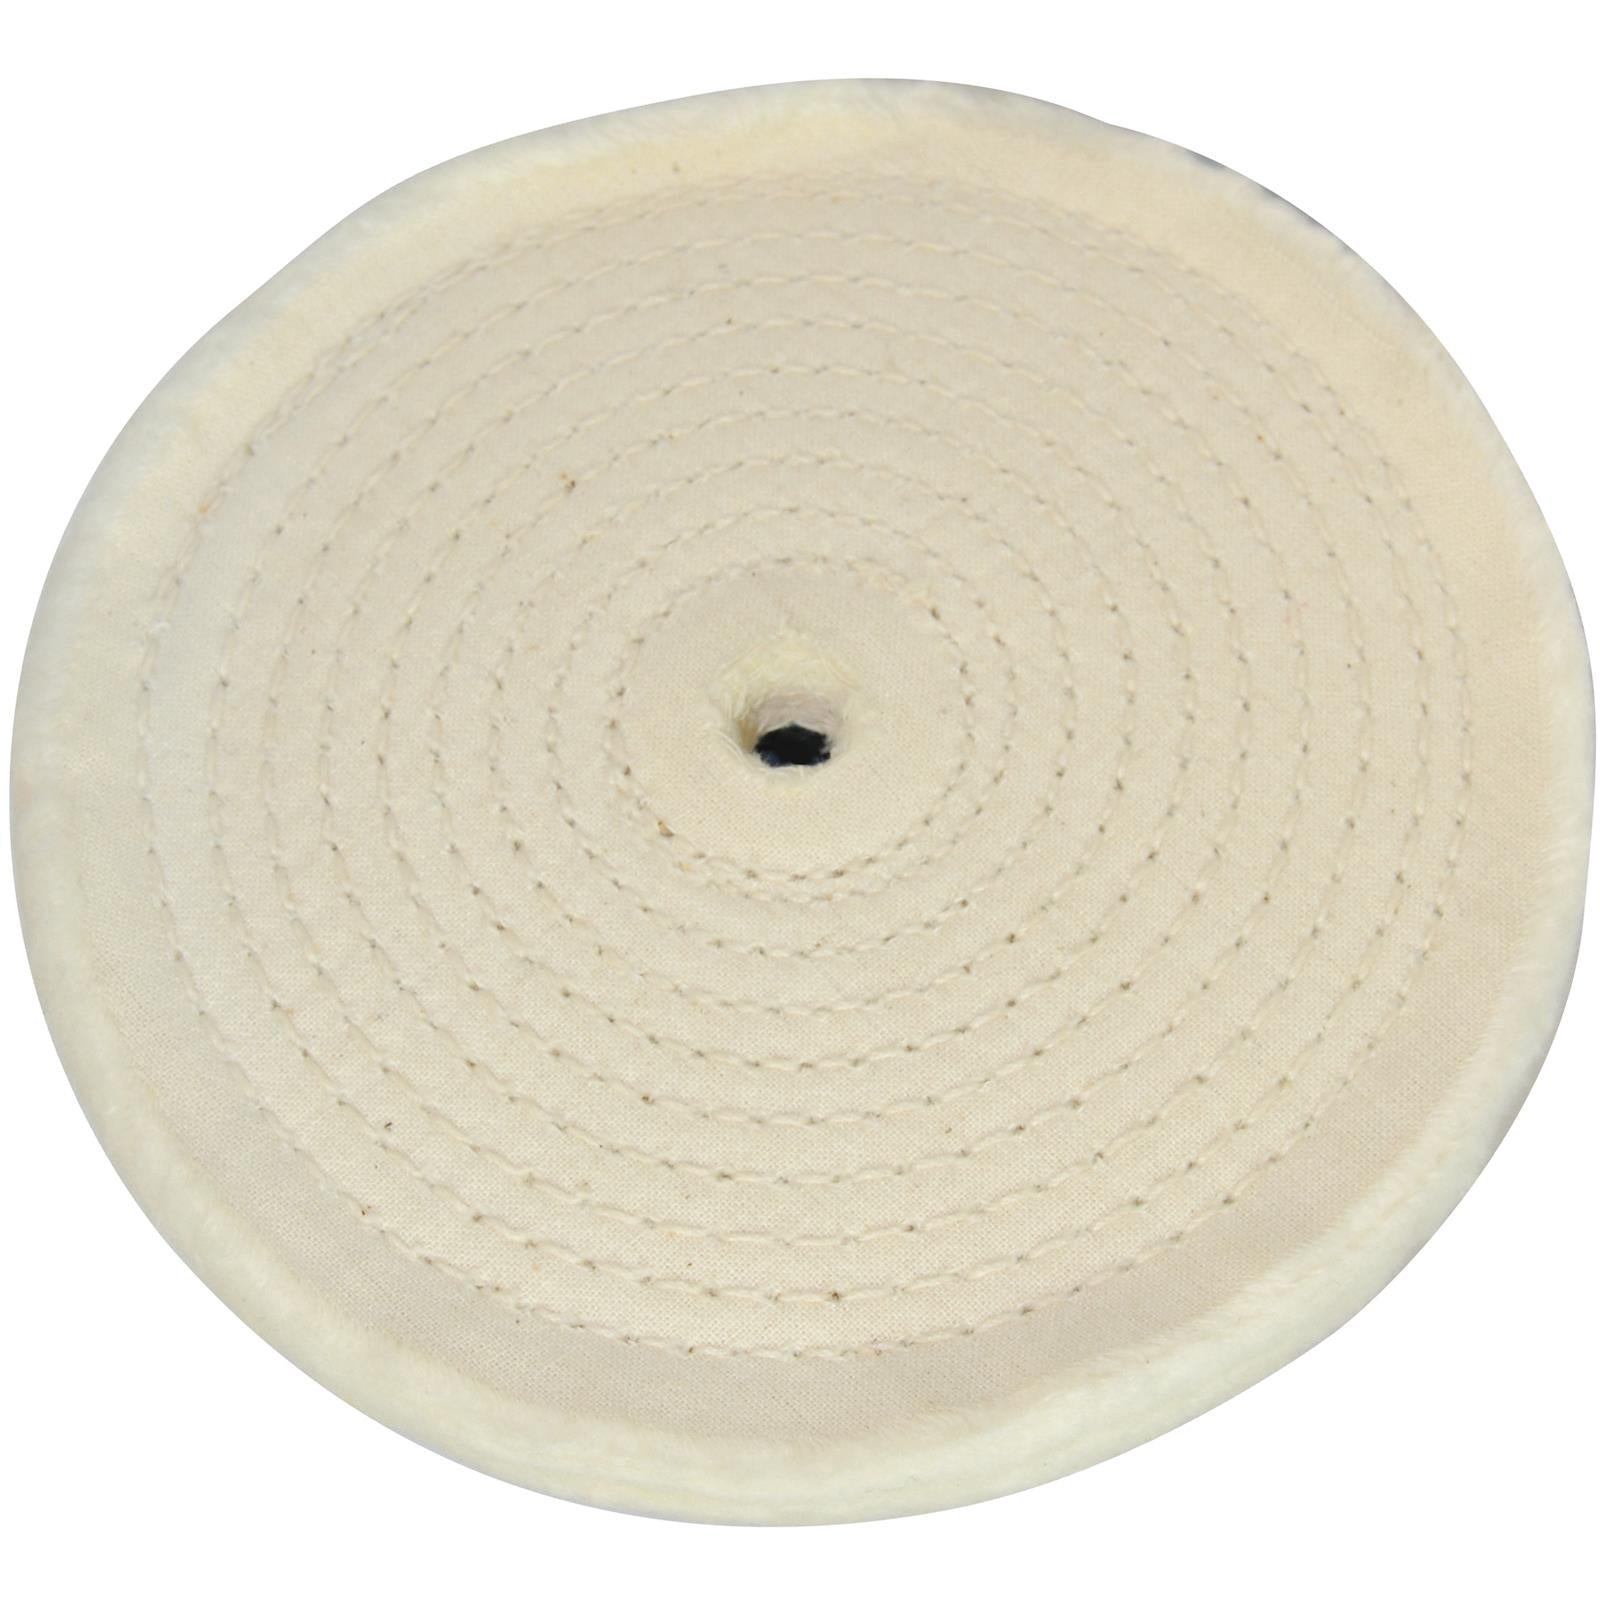 Silverline 150mm Spiral Stitched Buffing Wheel Cotton Polisher Buffer Grinder